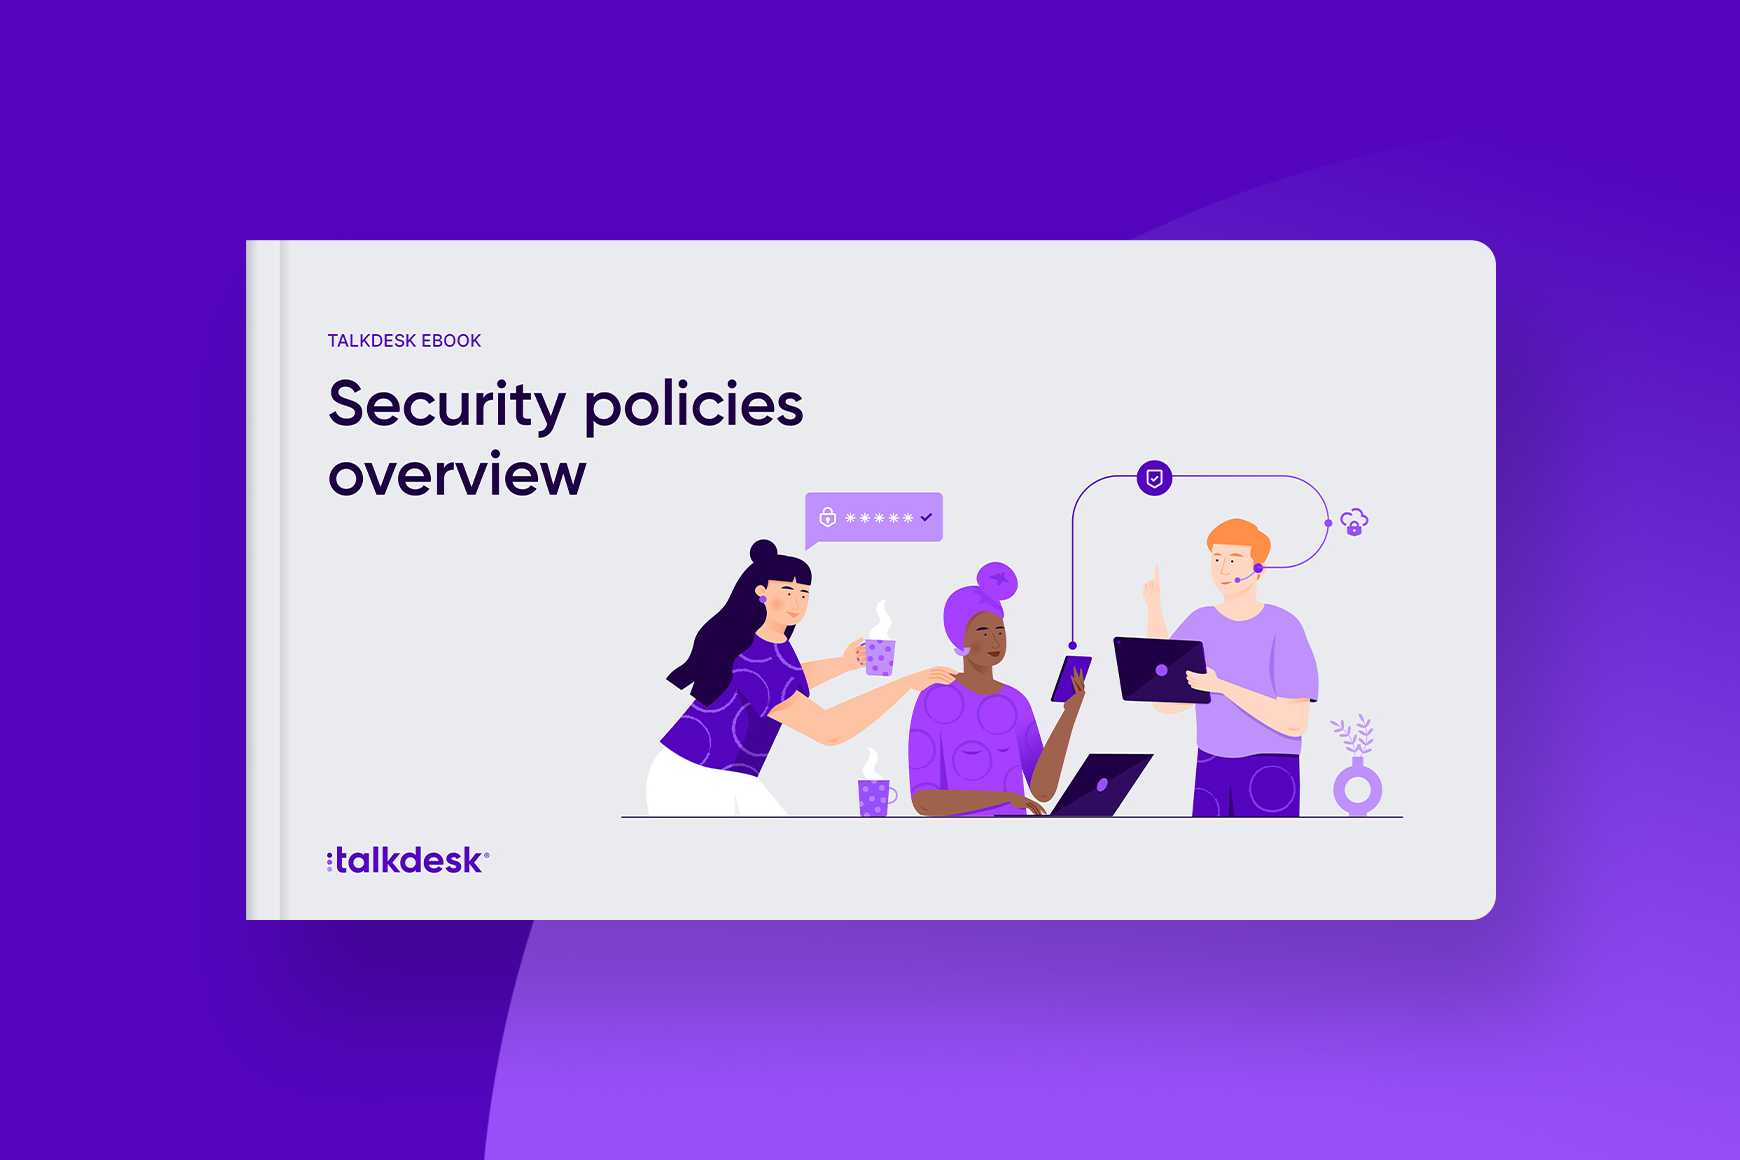 Talkdesk security policies